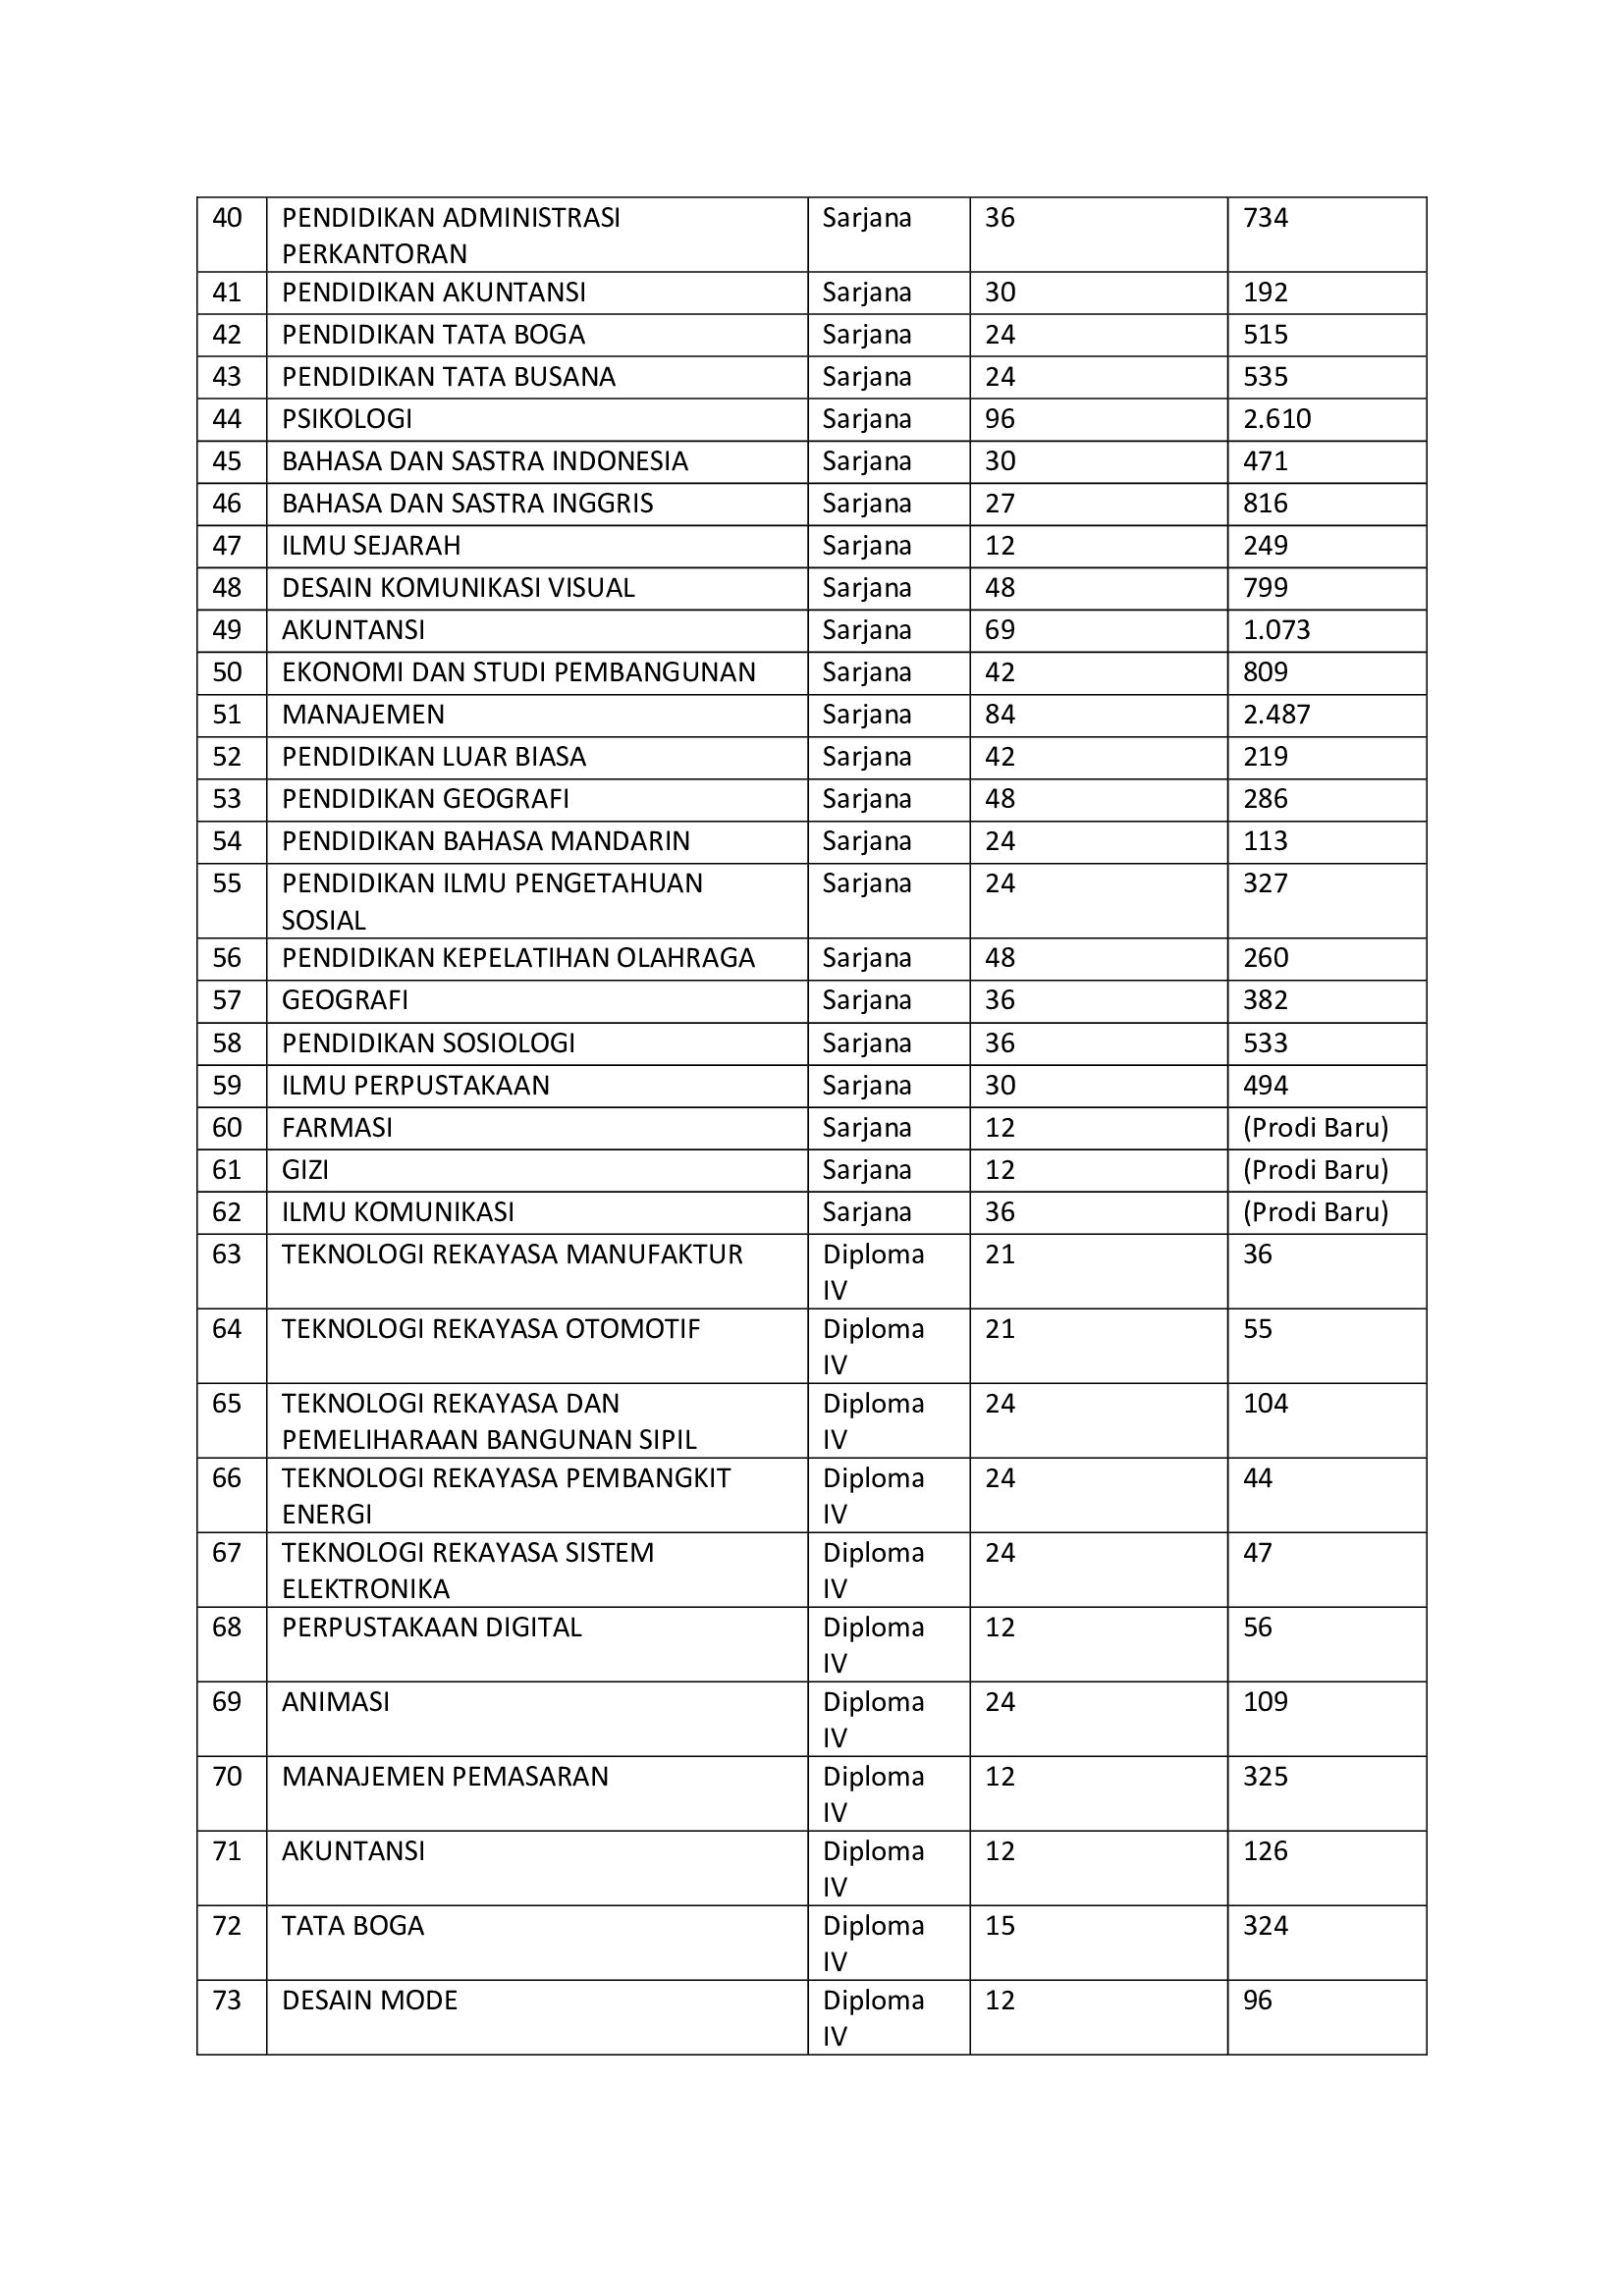 Daya Tampung, Peminat dan Prodi Baru UTBK-SNBT Universitas Negeri Malang (UM) Tahun 2023-2024